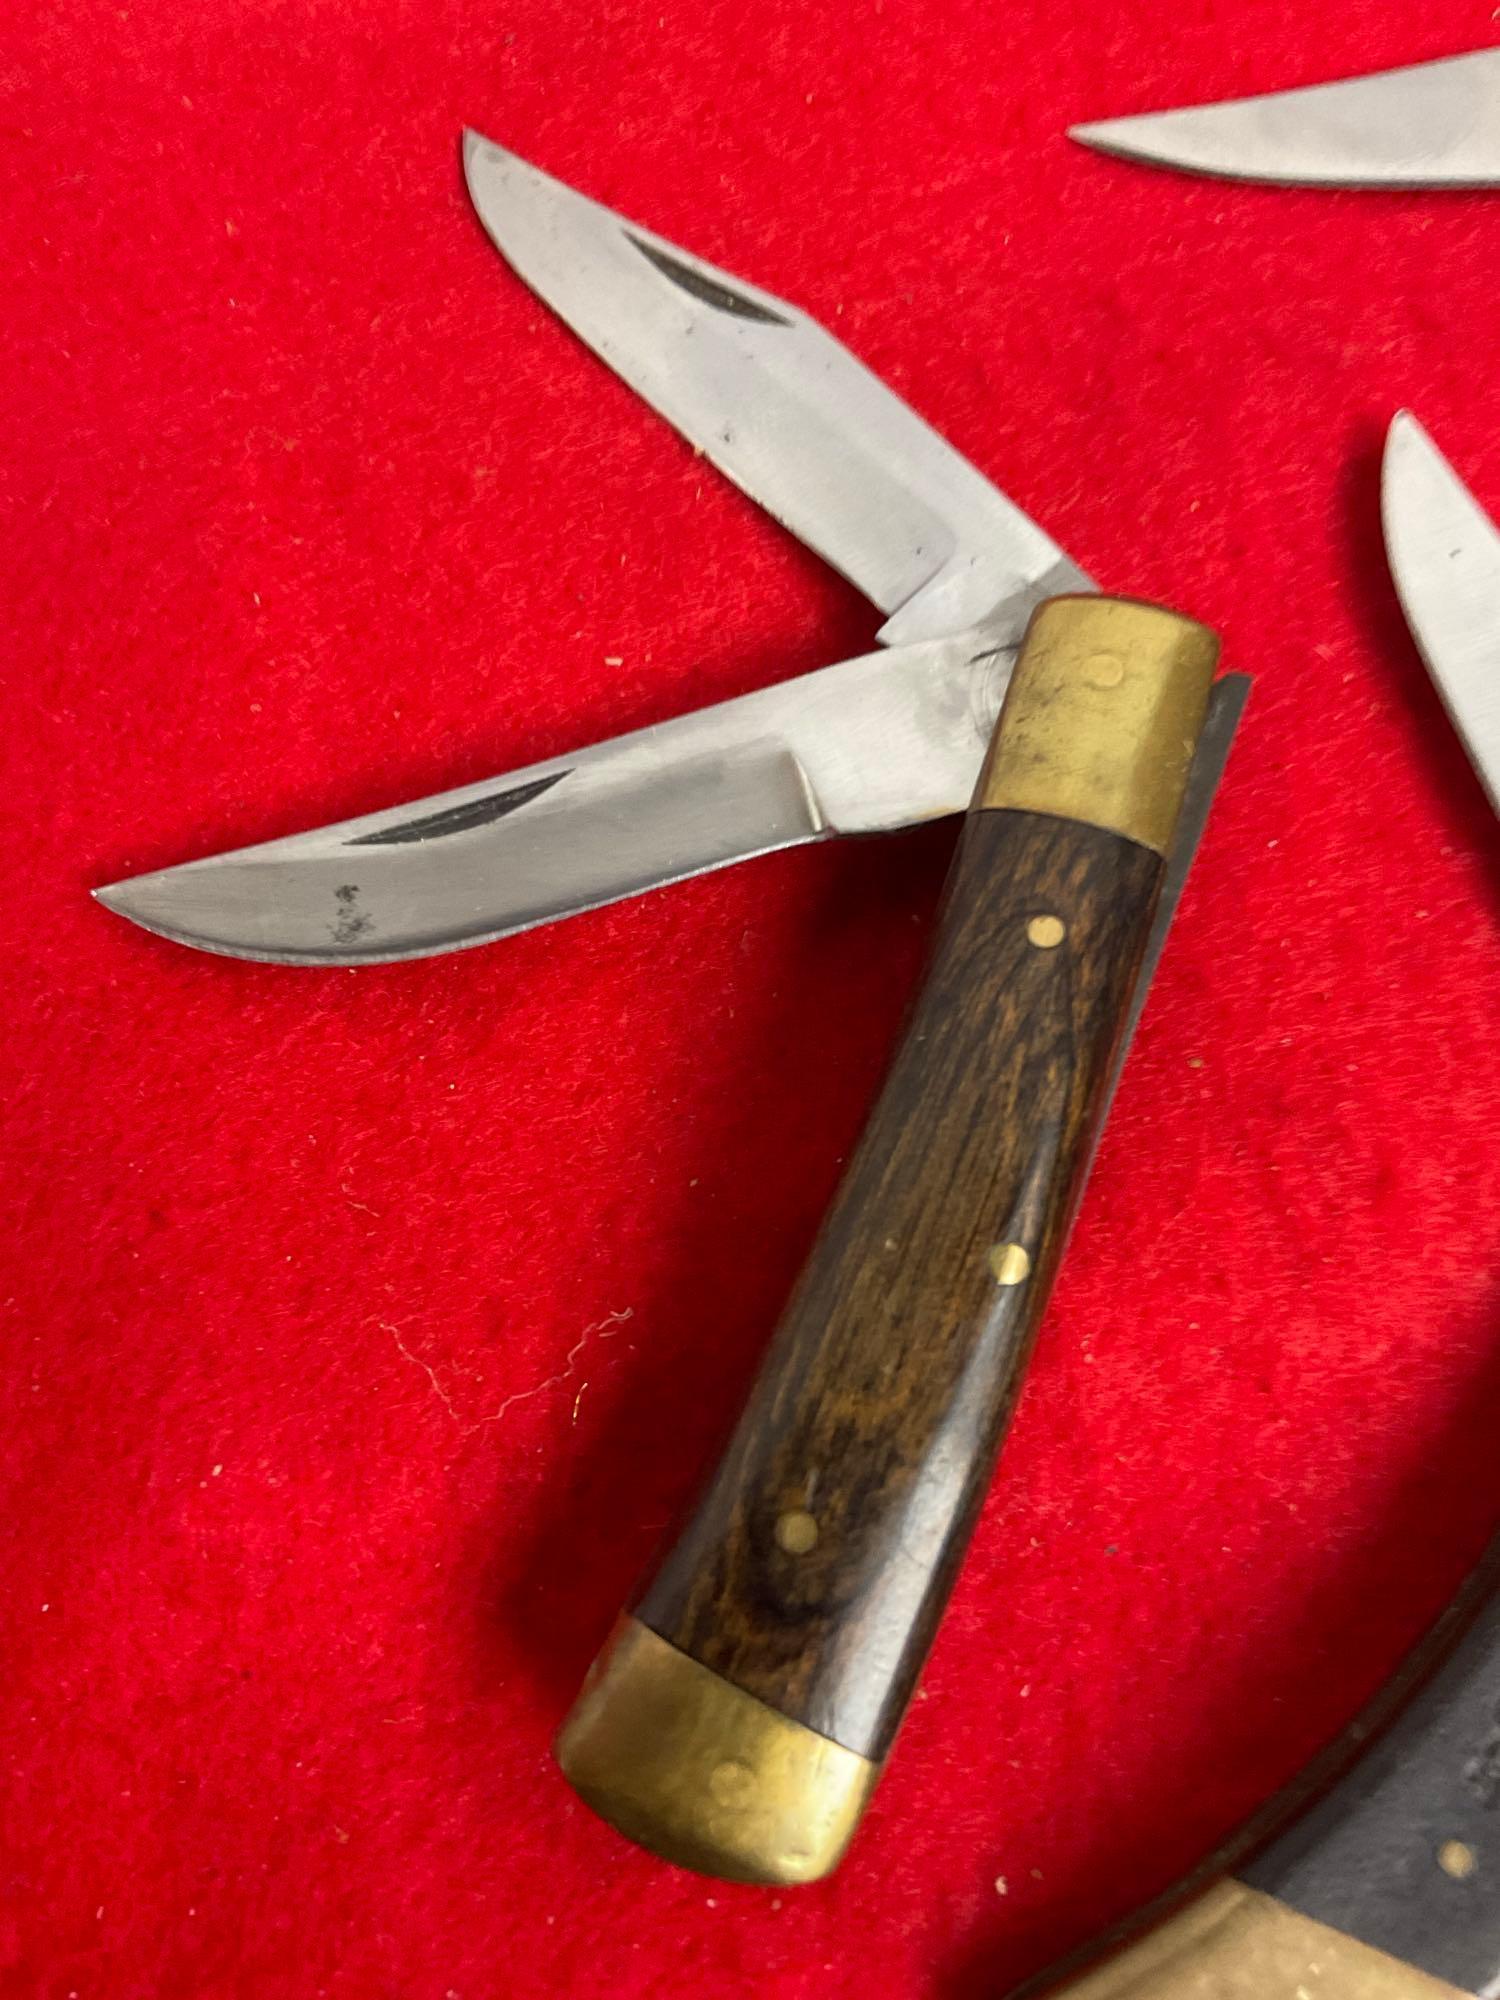 4x Folding Blade Pocket Knives w/ Wood Handles incl. Utica, Sarge Boy Scout Edition, & Janjua